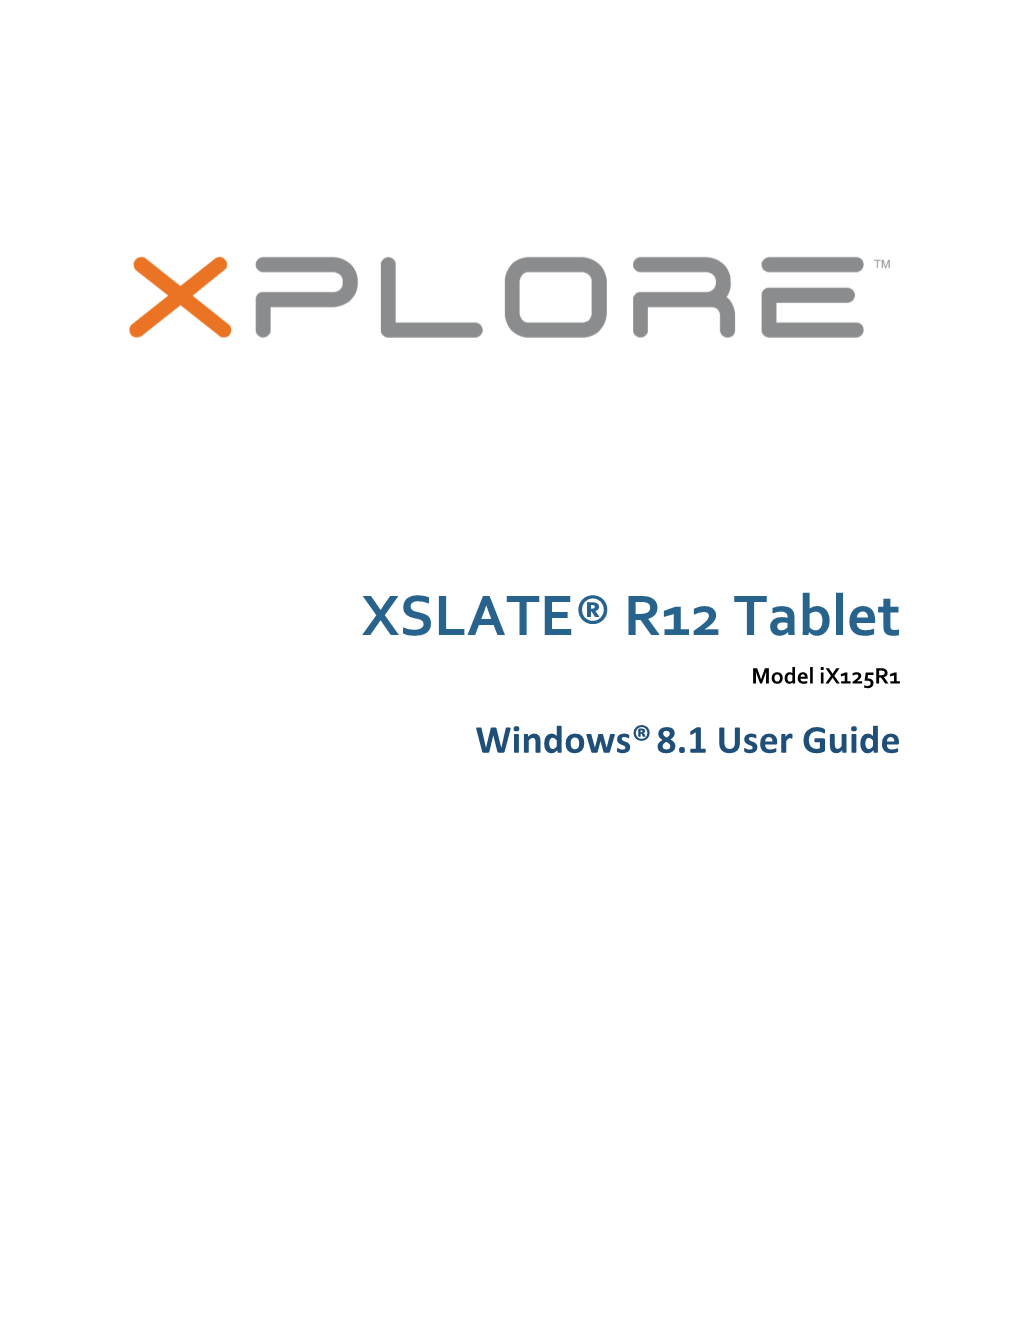 XSLATE® R12 Tablet Model Ix125r1